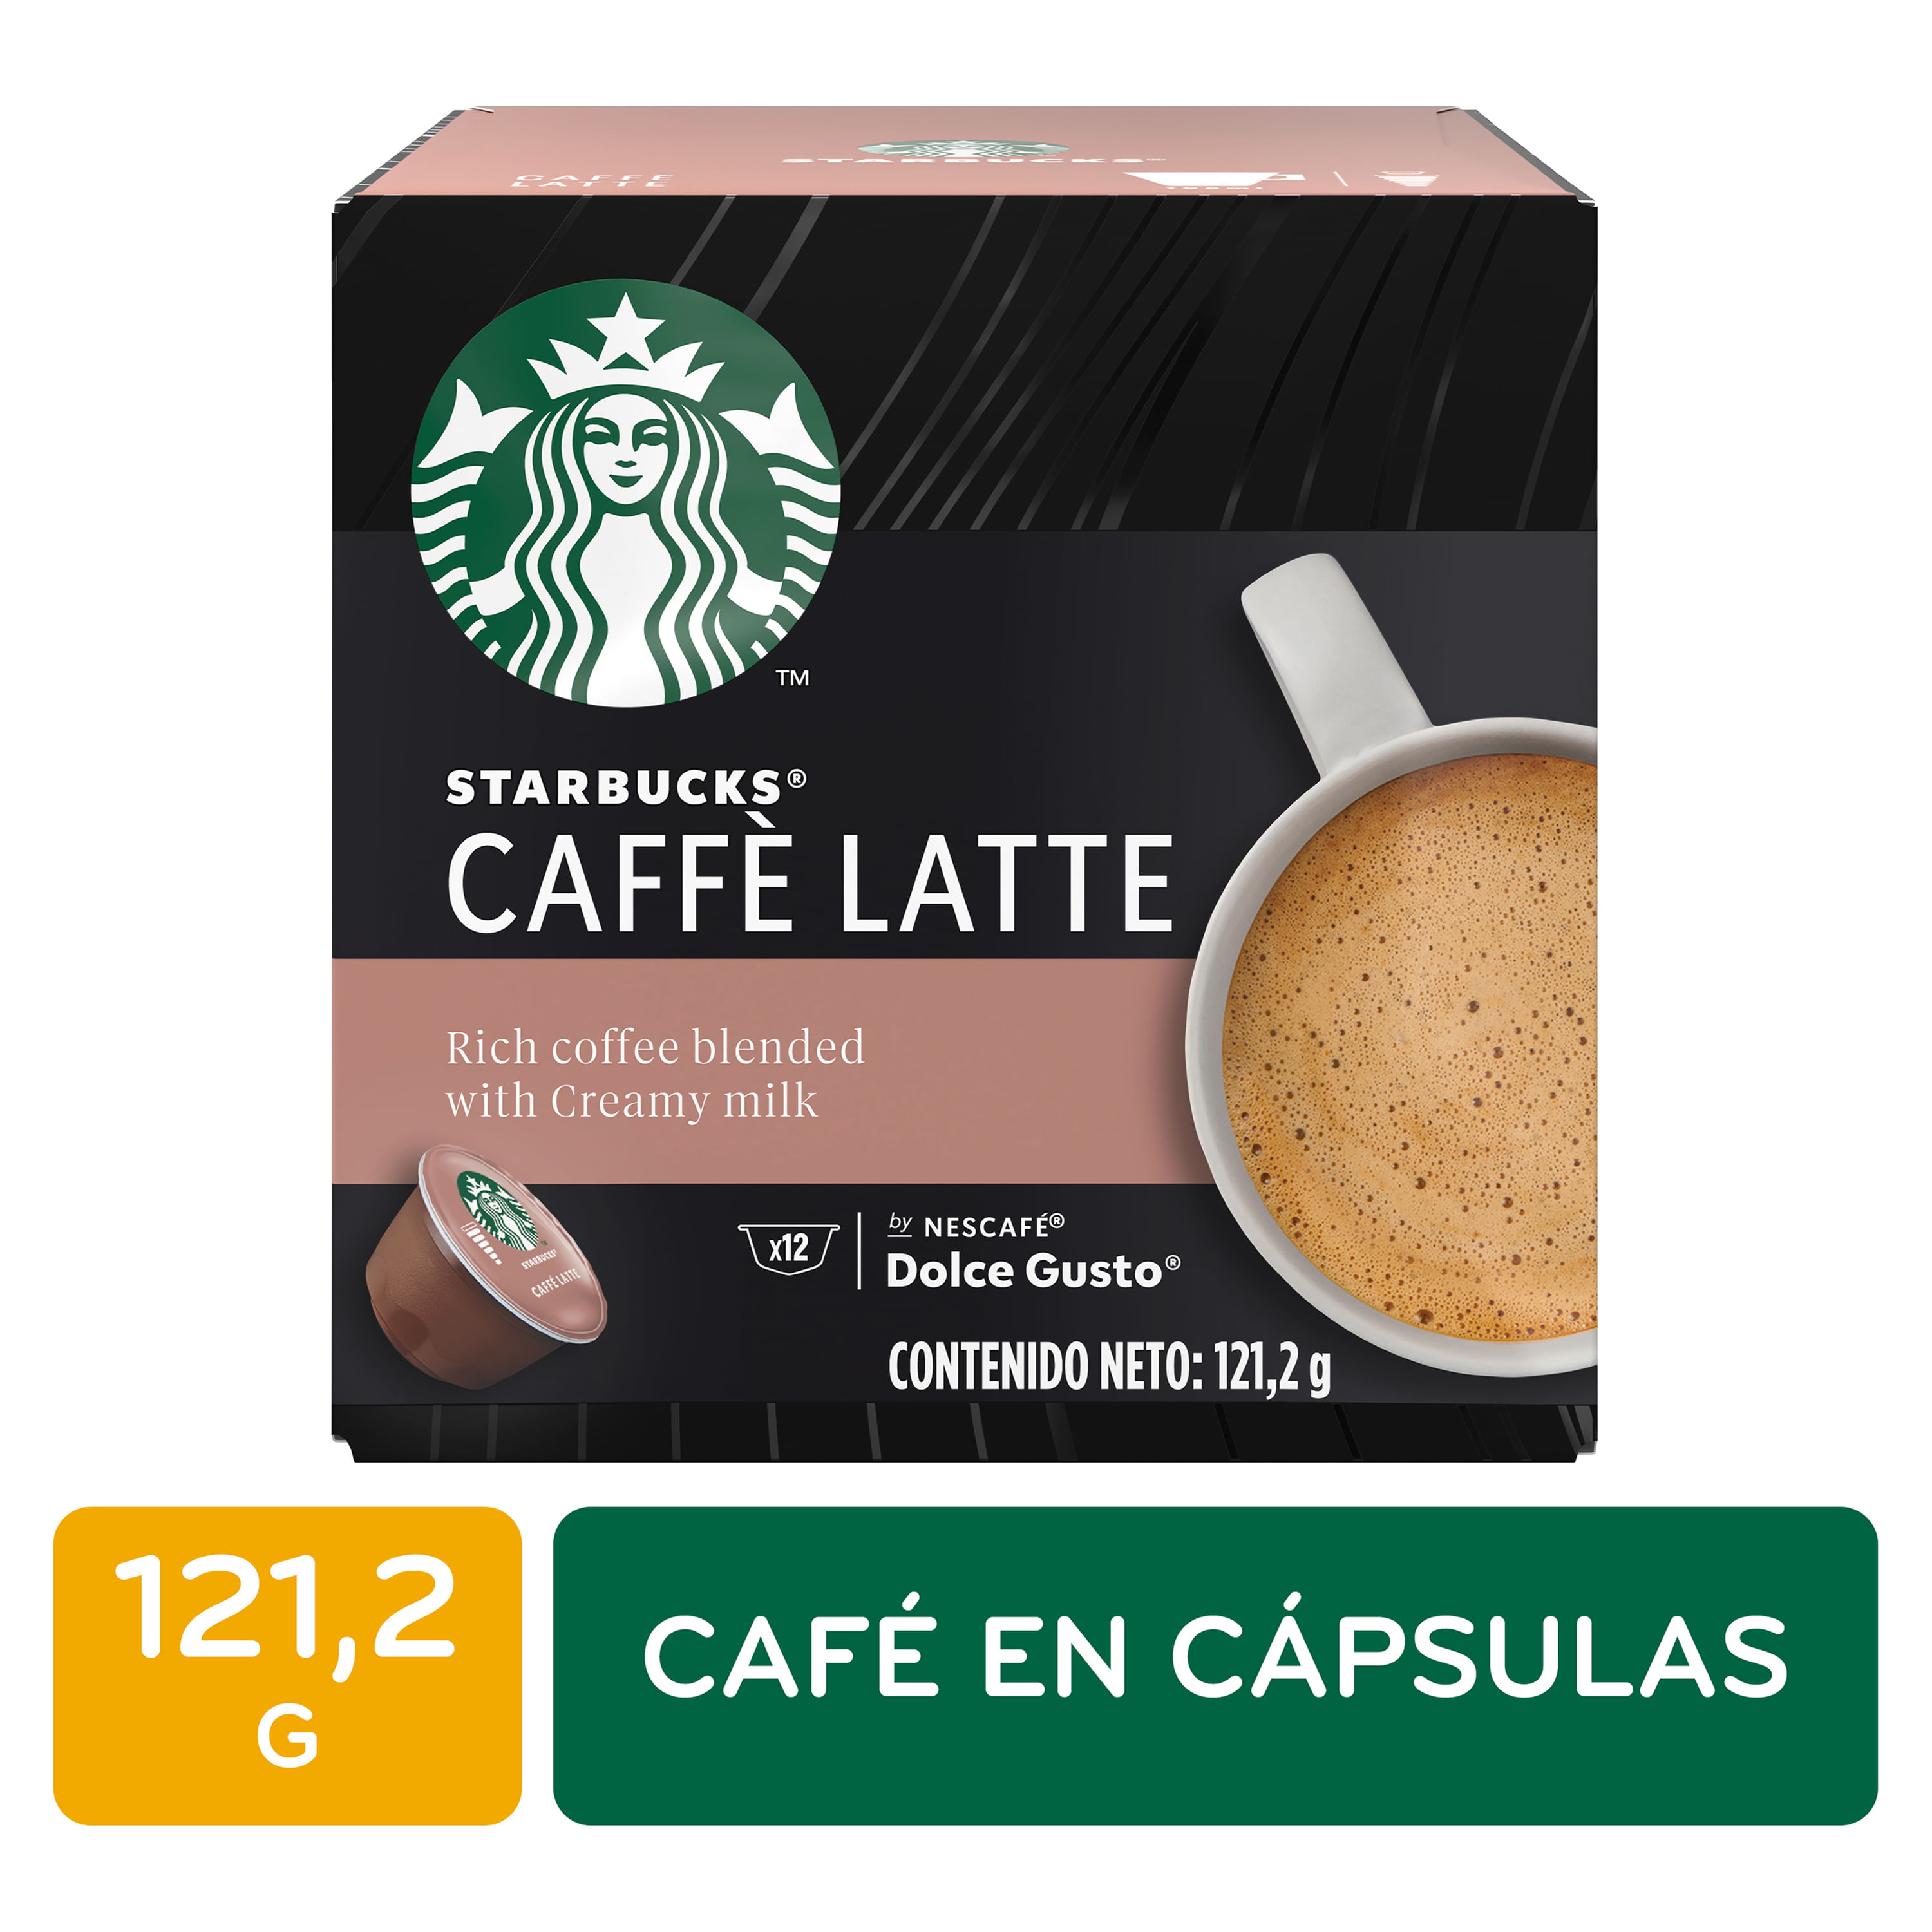 Caf-Starbucks-By-Nescaf-Dolce-Gusto-Caffe-Latte-12-C-psulas-121-2g-1-39092